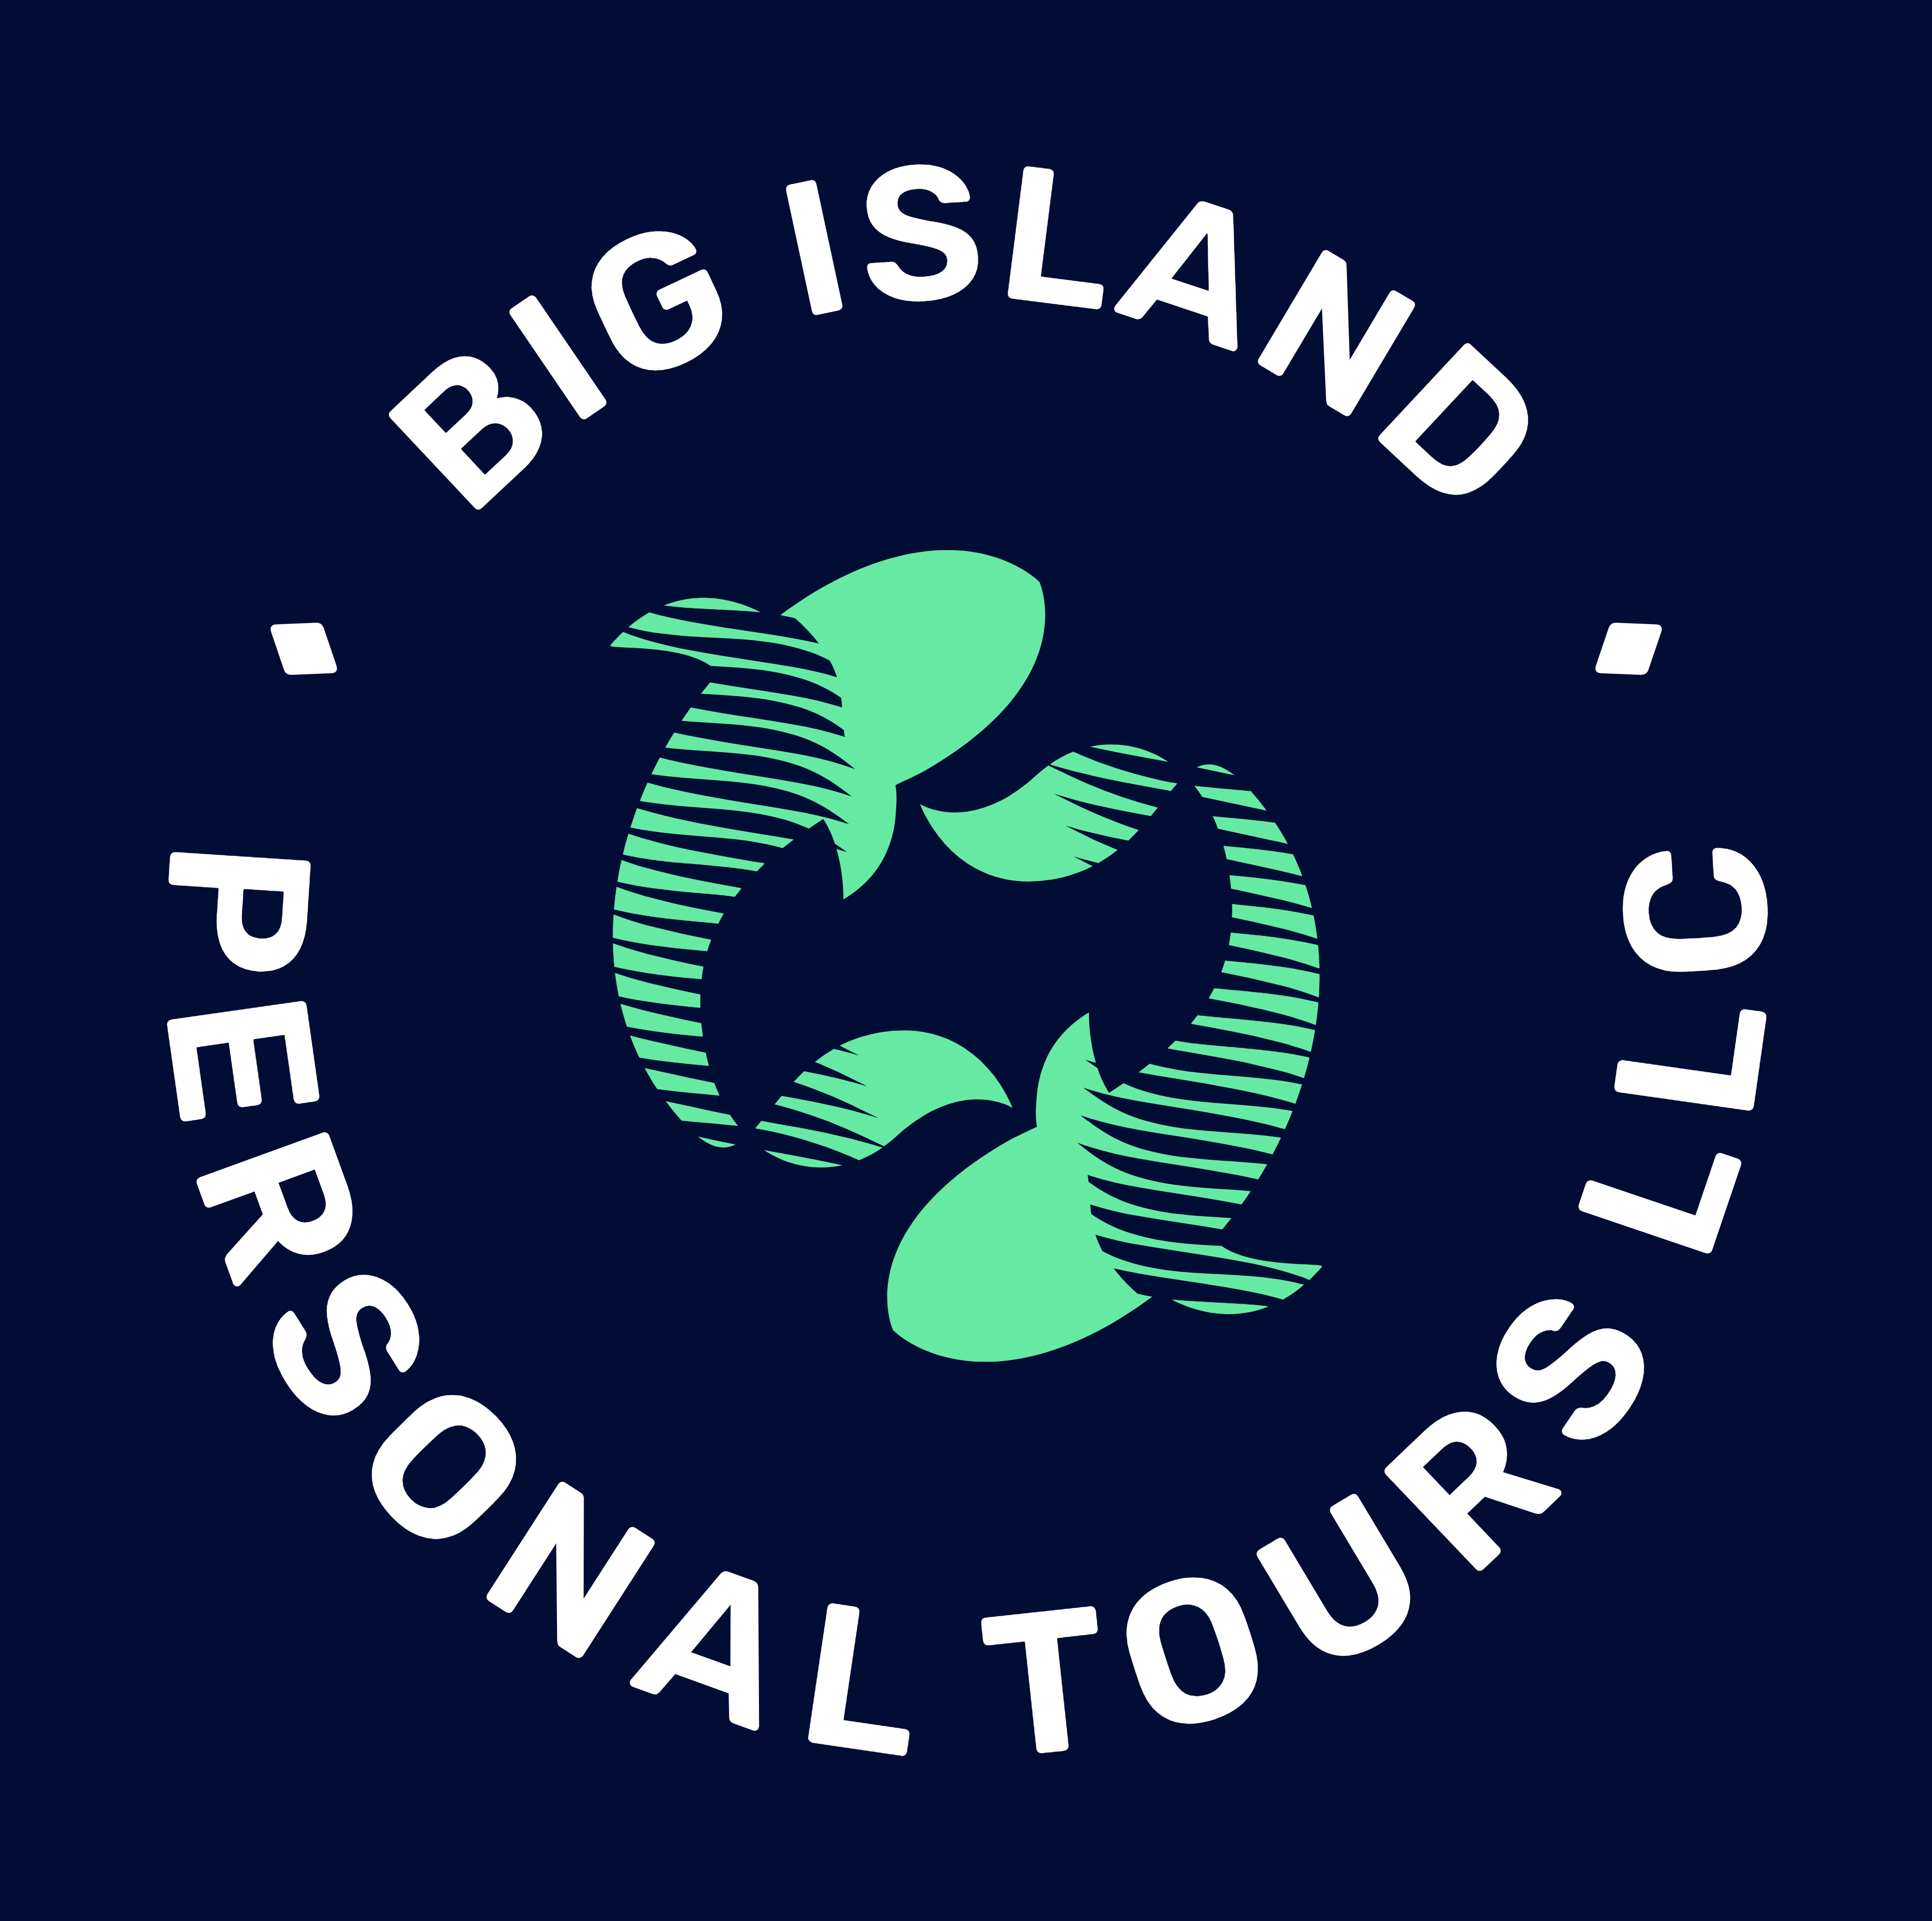 Big Island Personal Tours